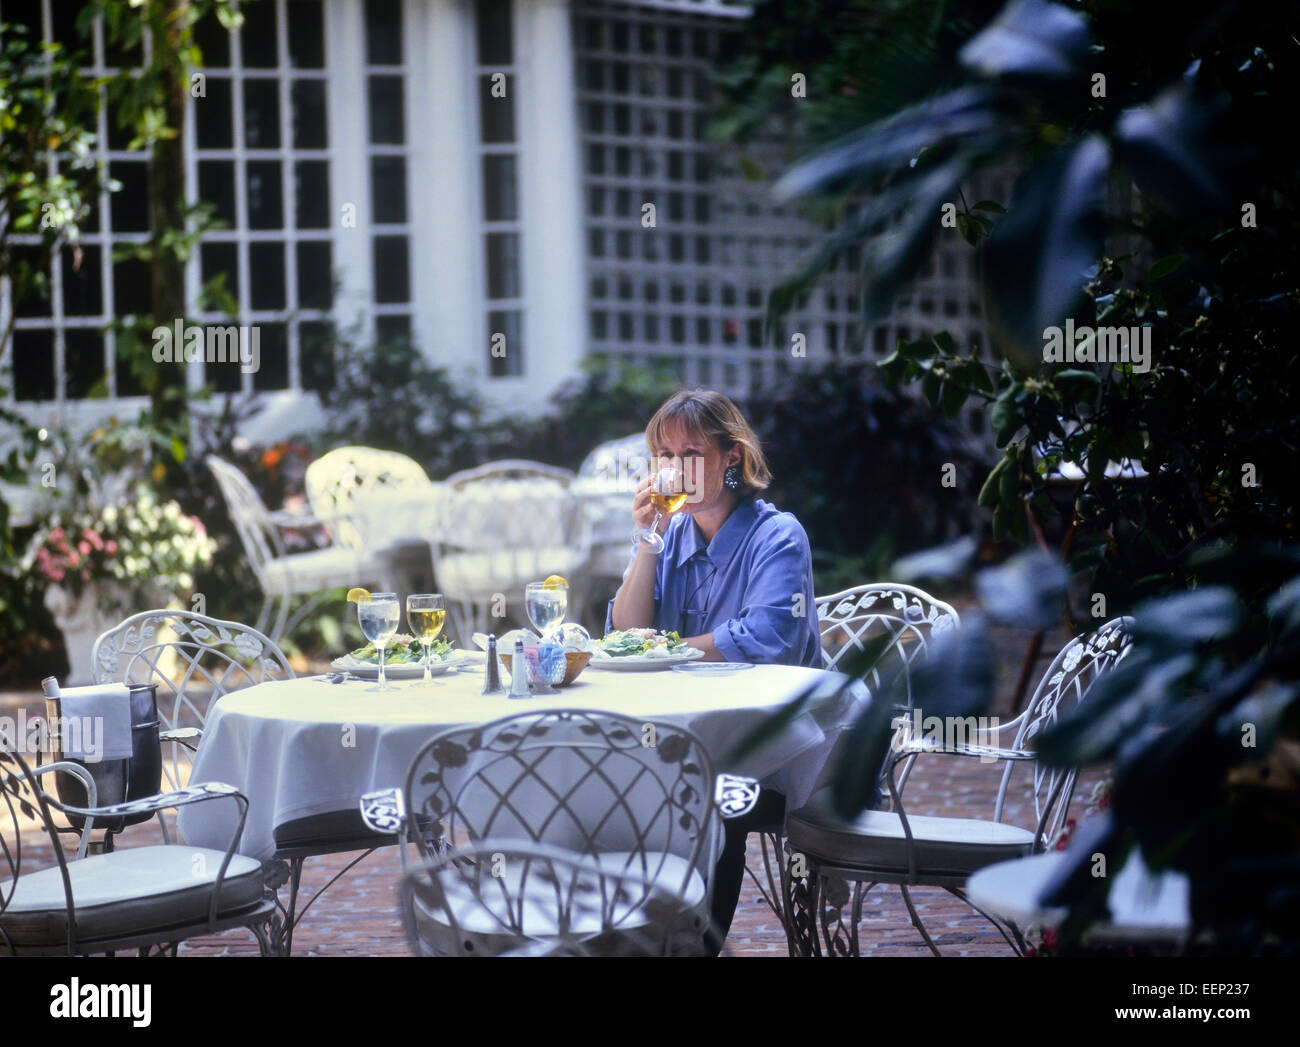 Woman having lunch in a restaurant garden courtyard. The Veranda, Fort Myers. Florida. USA Stock Photo